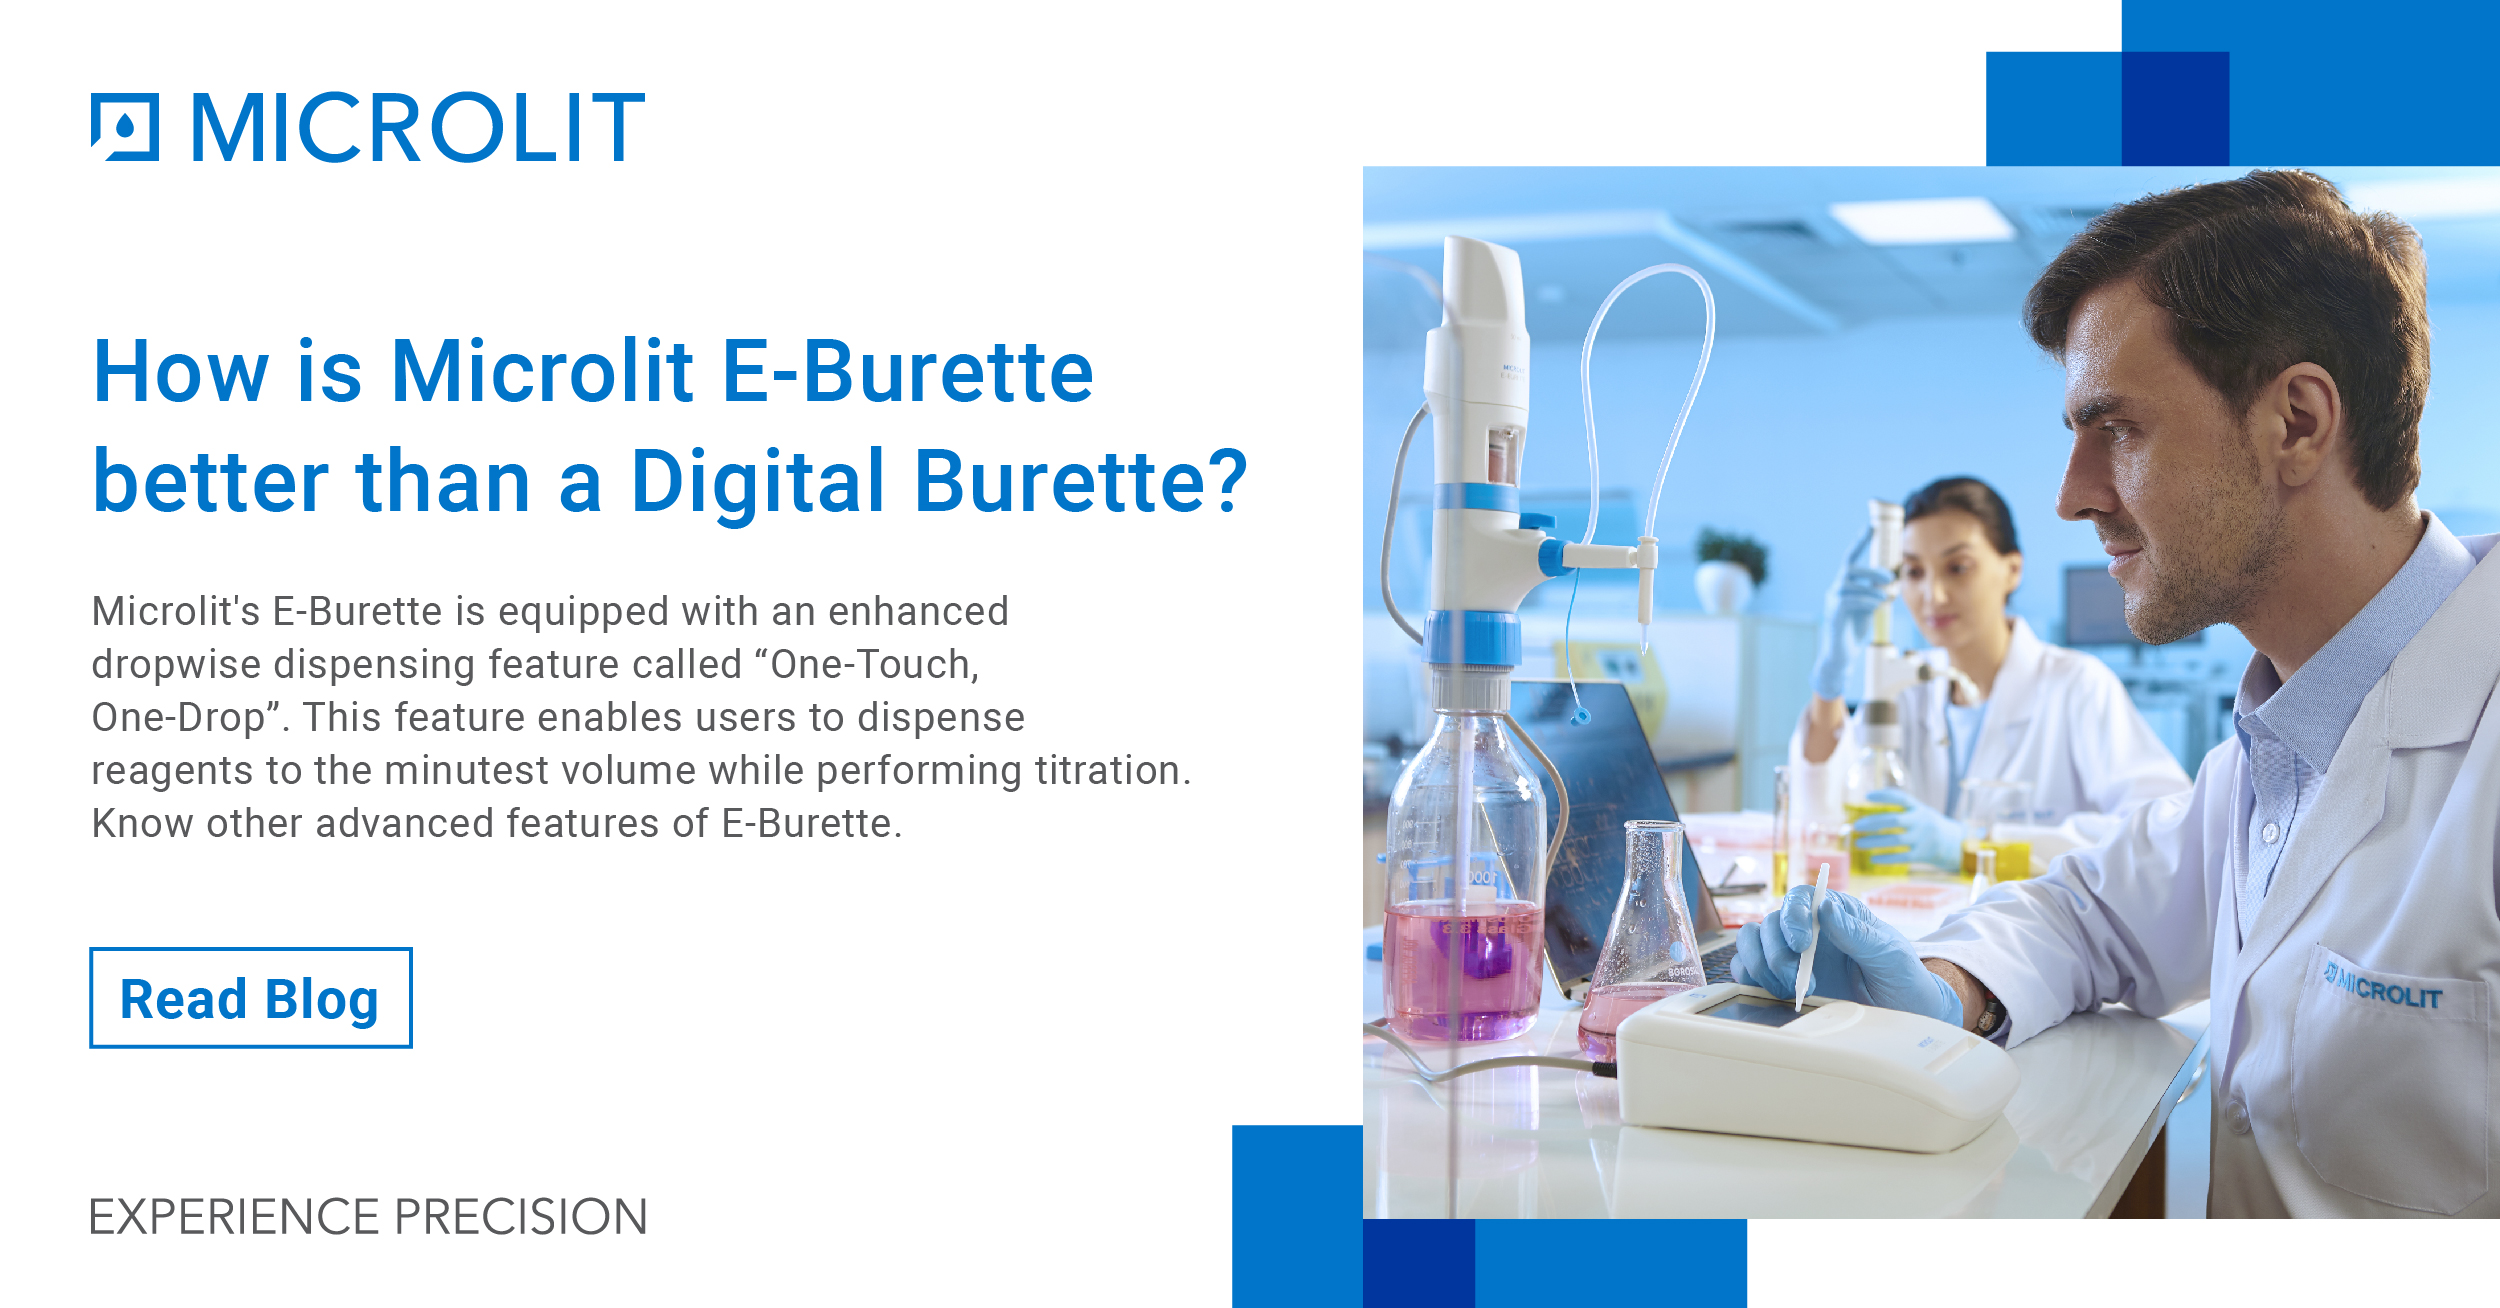 How is Microlit E-Burette better than a Digital Burette?